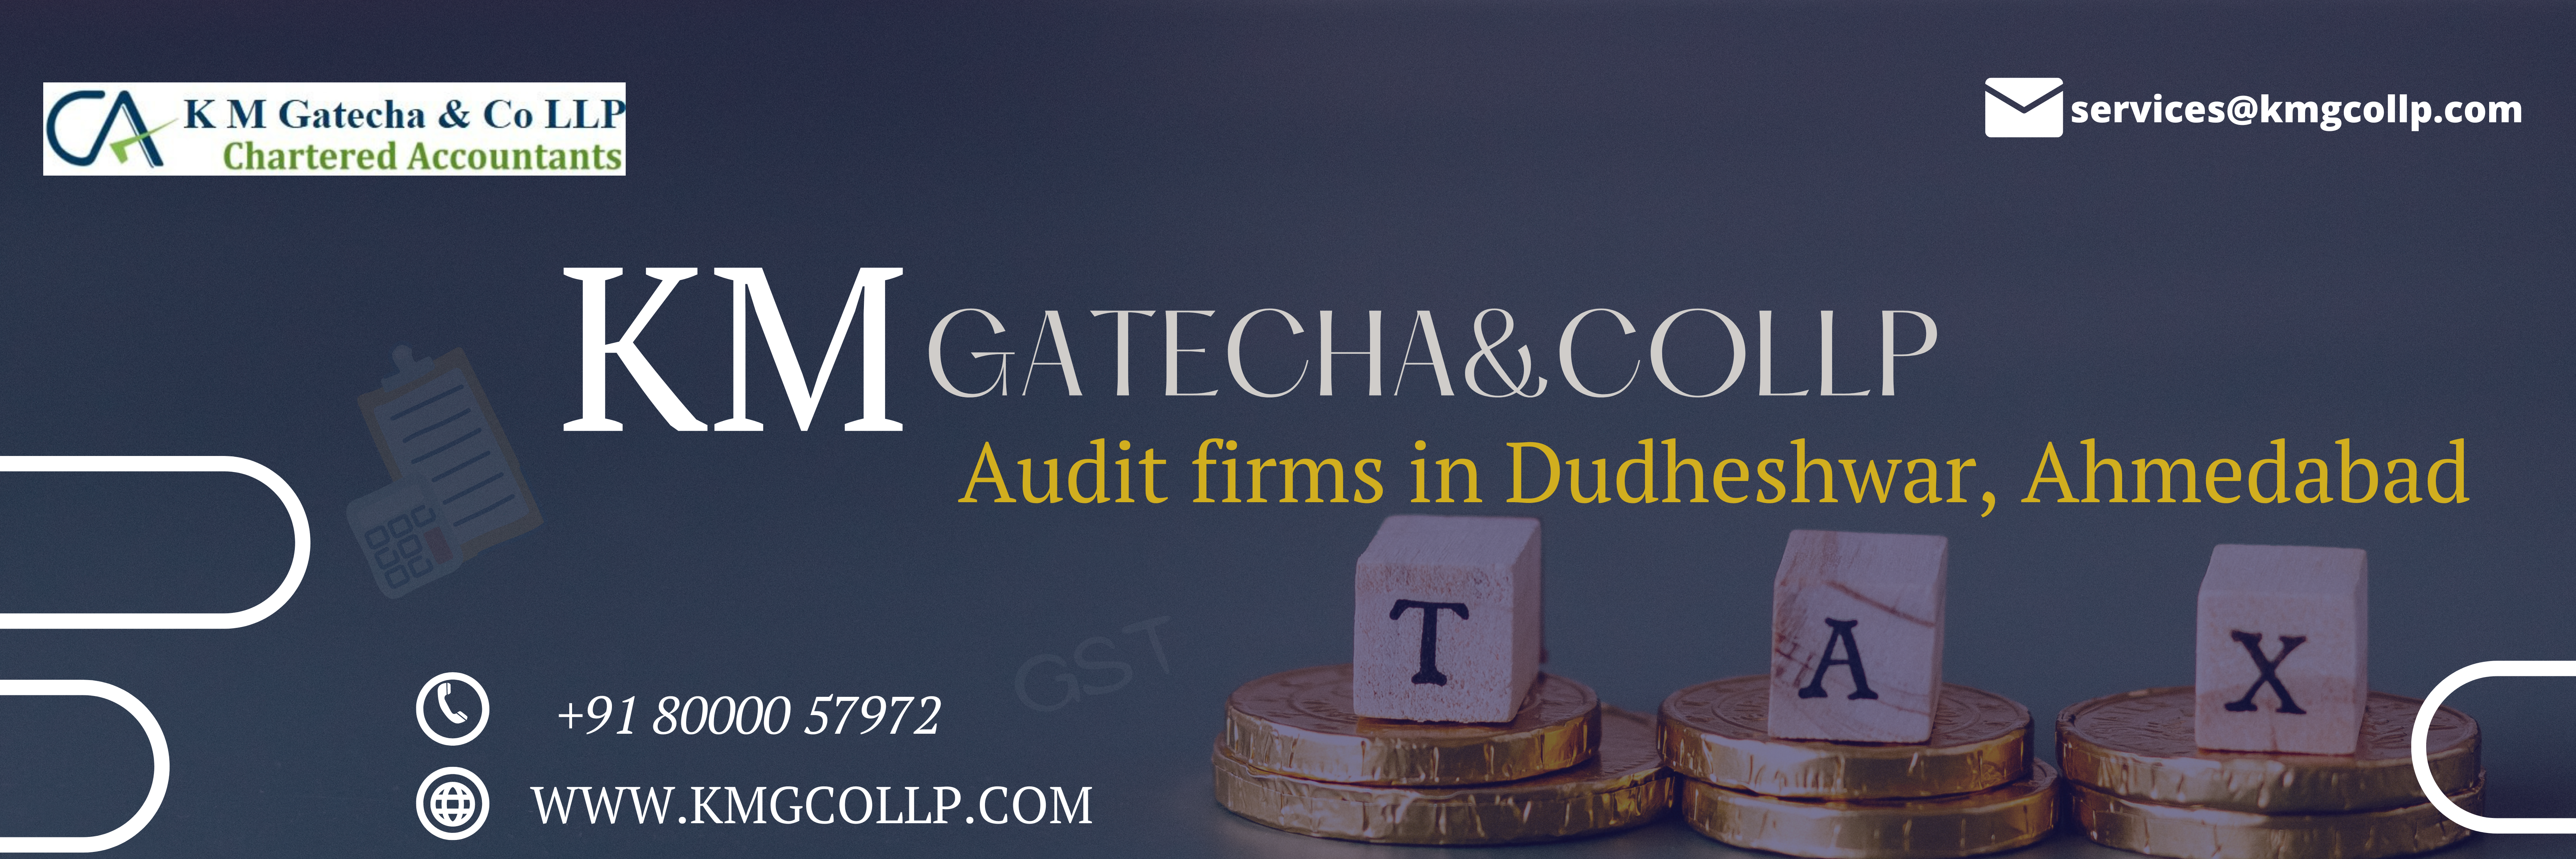 Audit firms in Dudheshwar, Ahmedabad